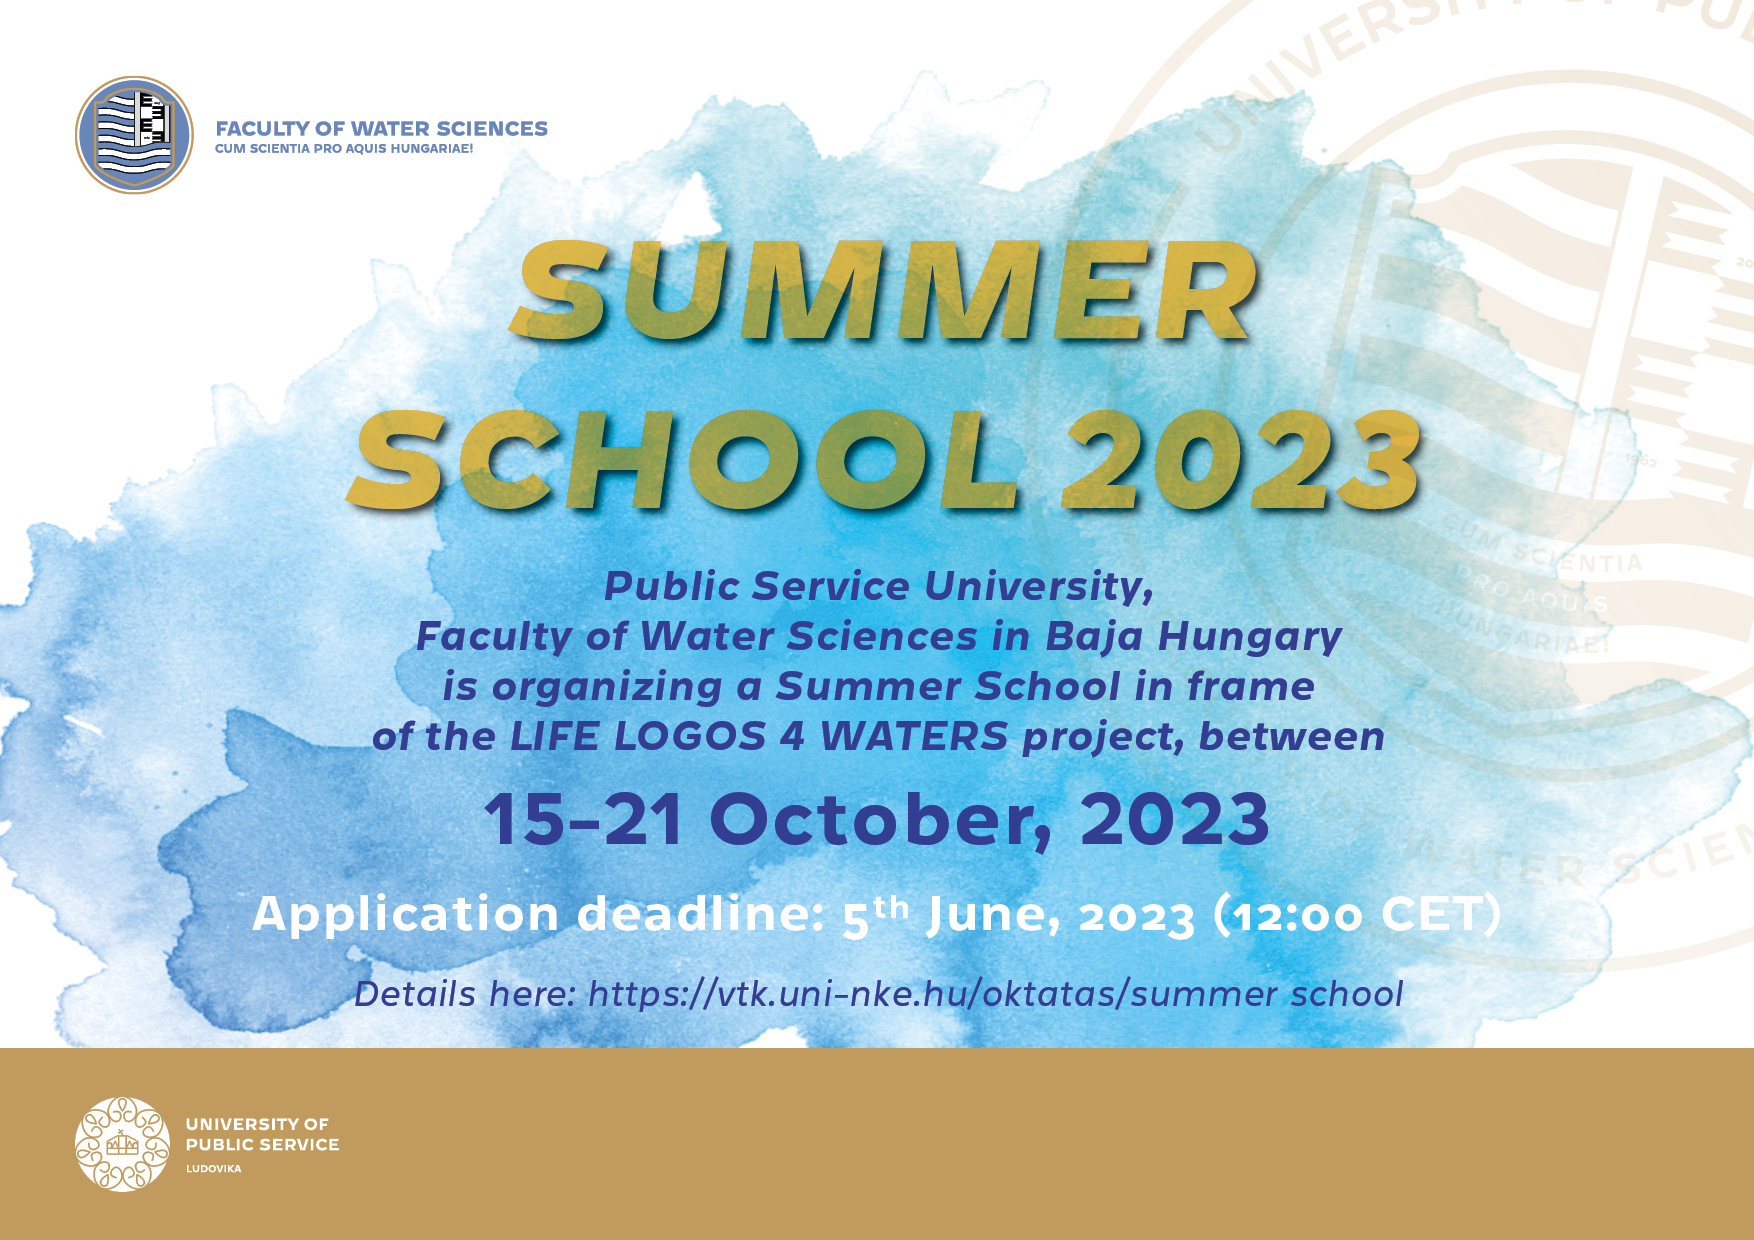 Summer School 2023 plakat 02 230322